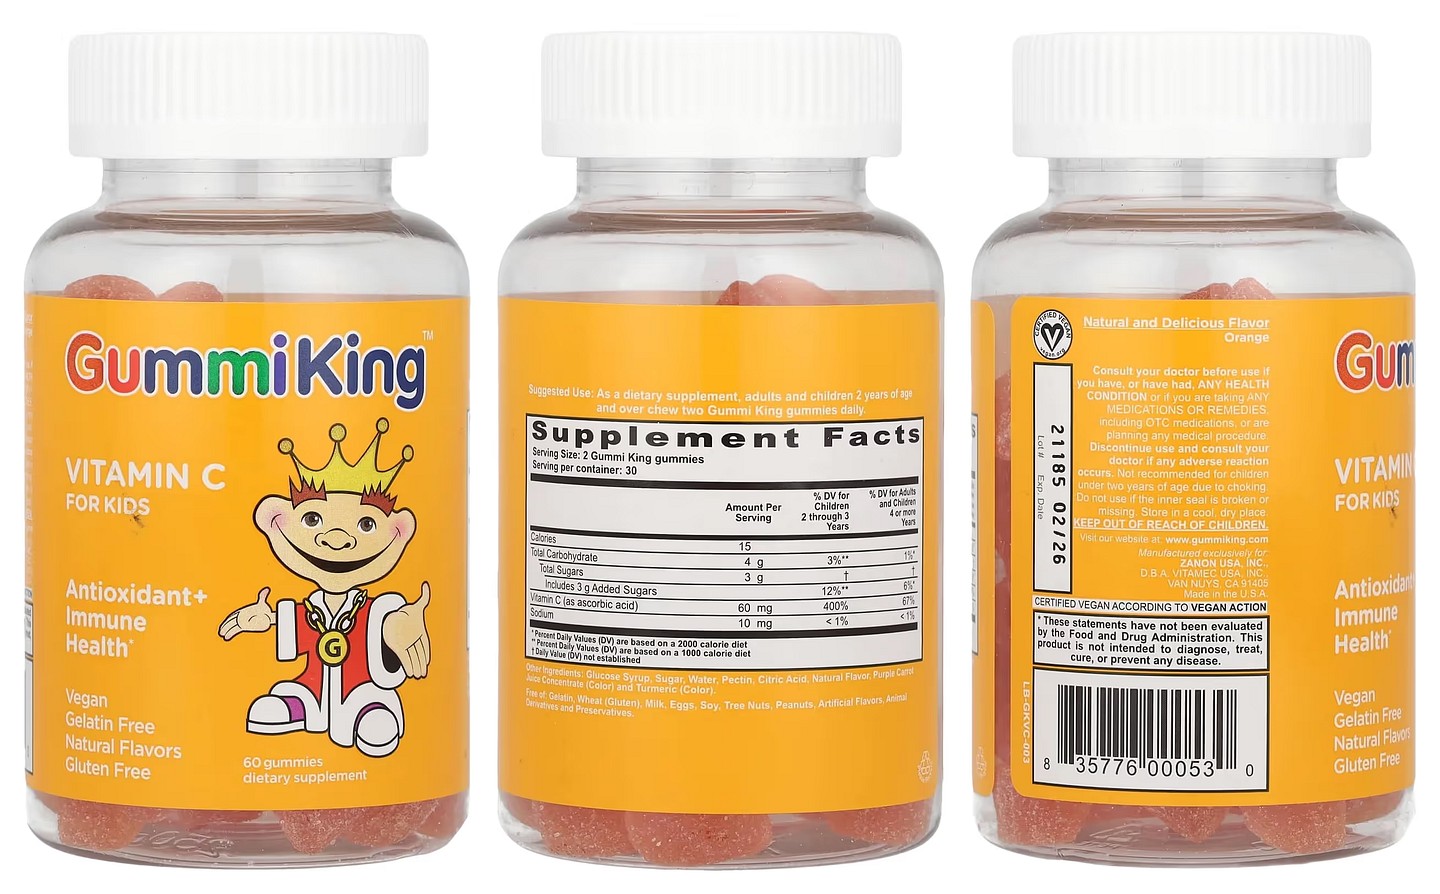 GummiKing, Vitamin C for Kids packaging